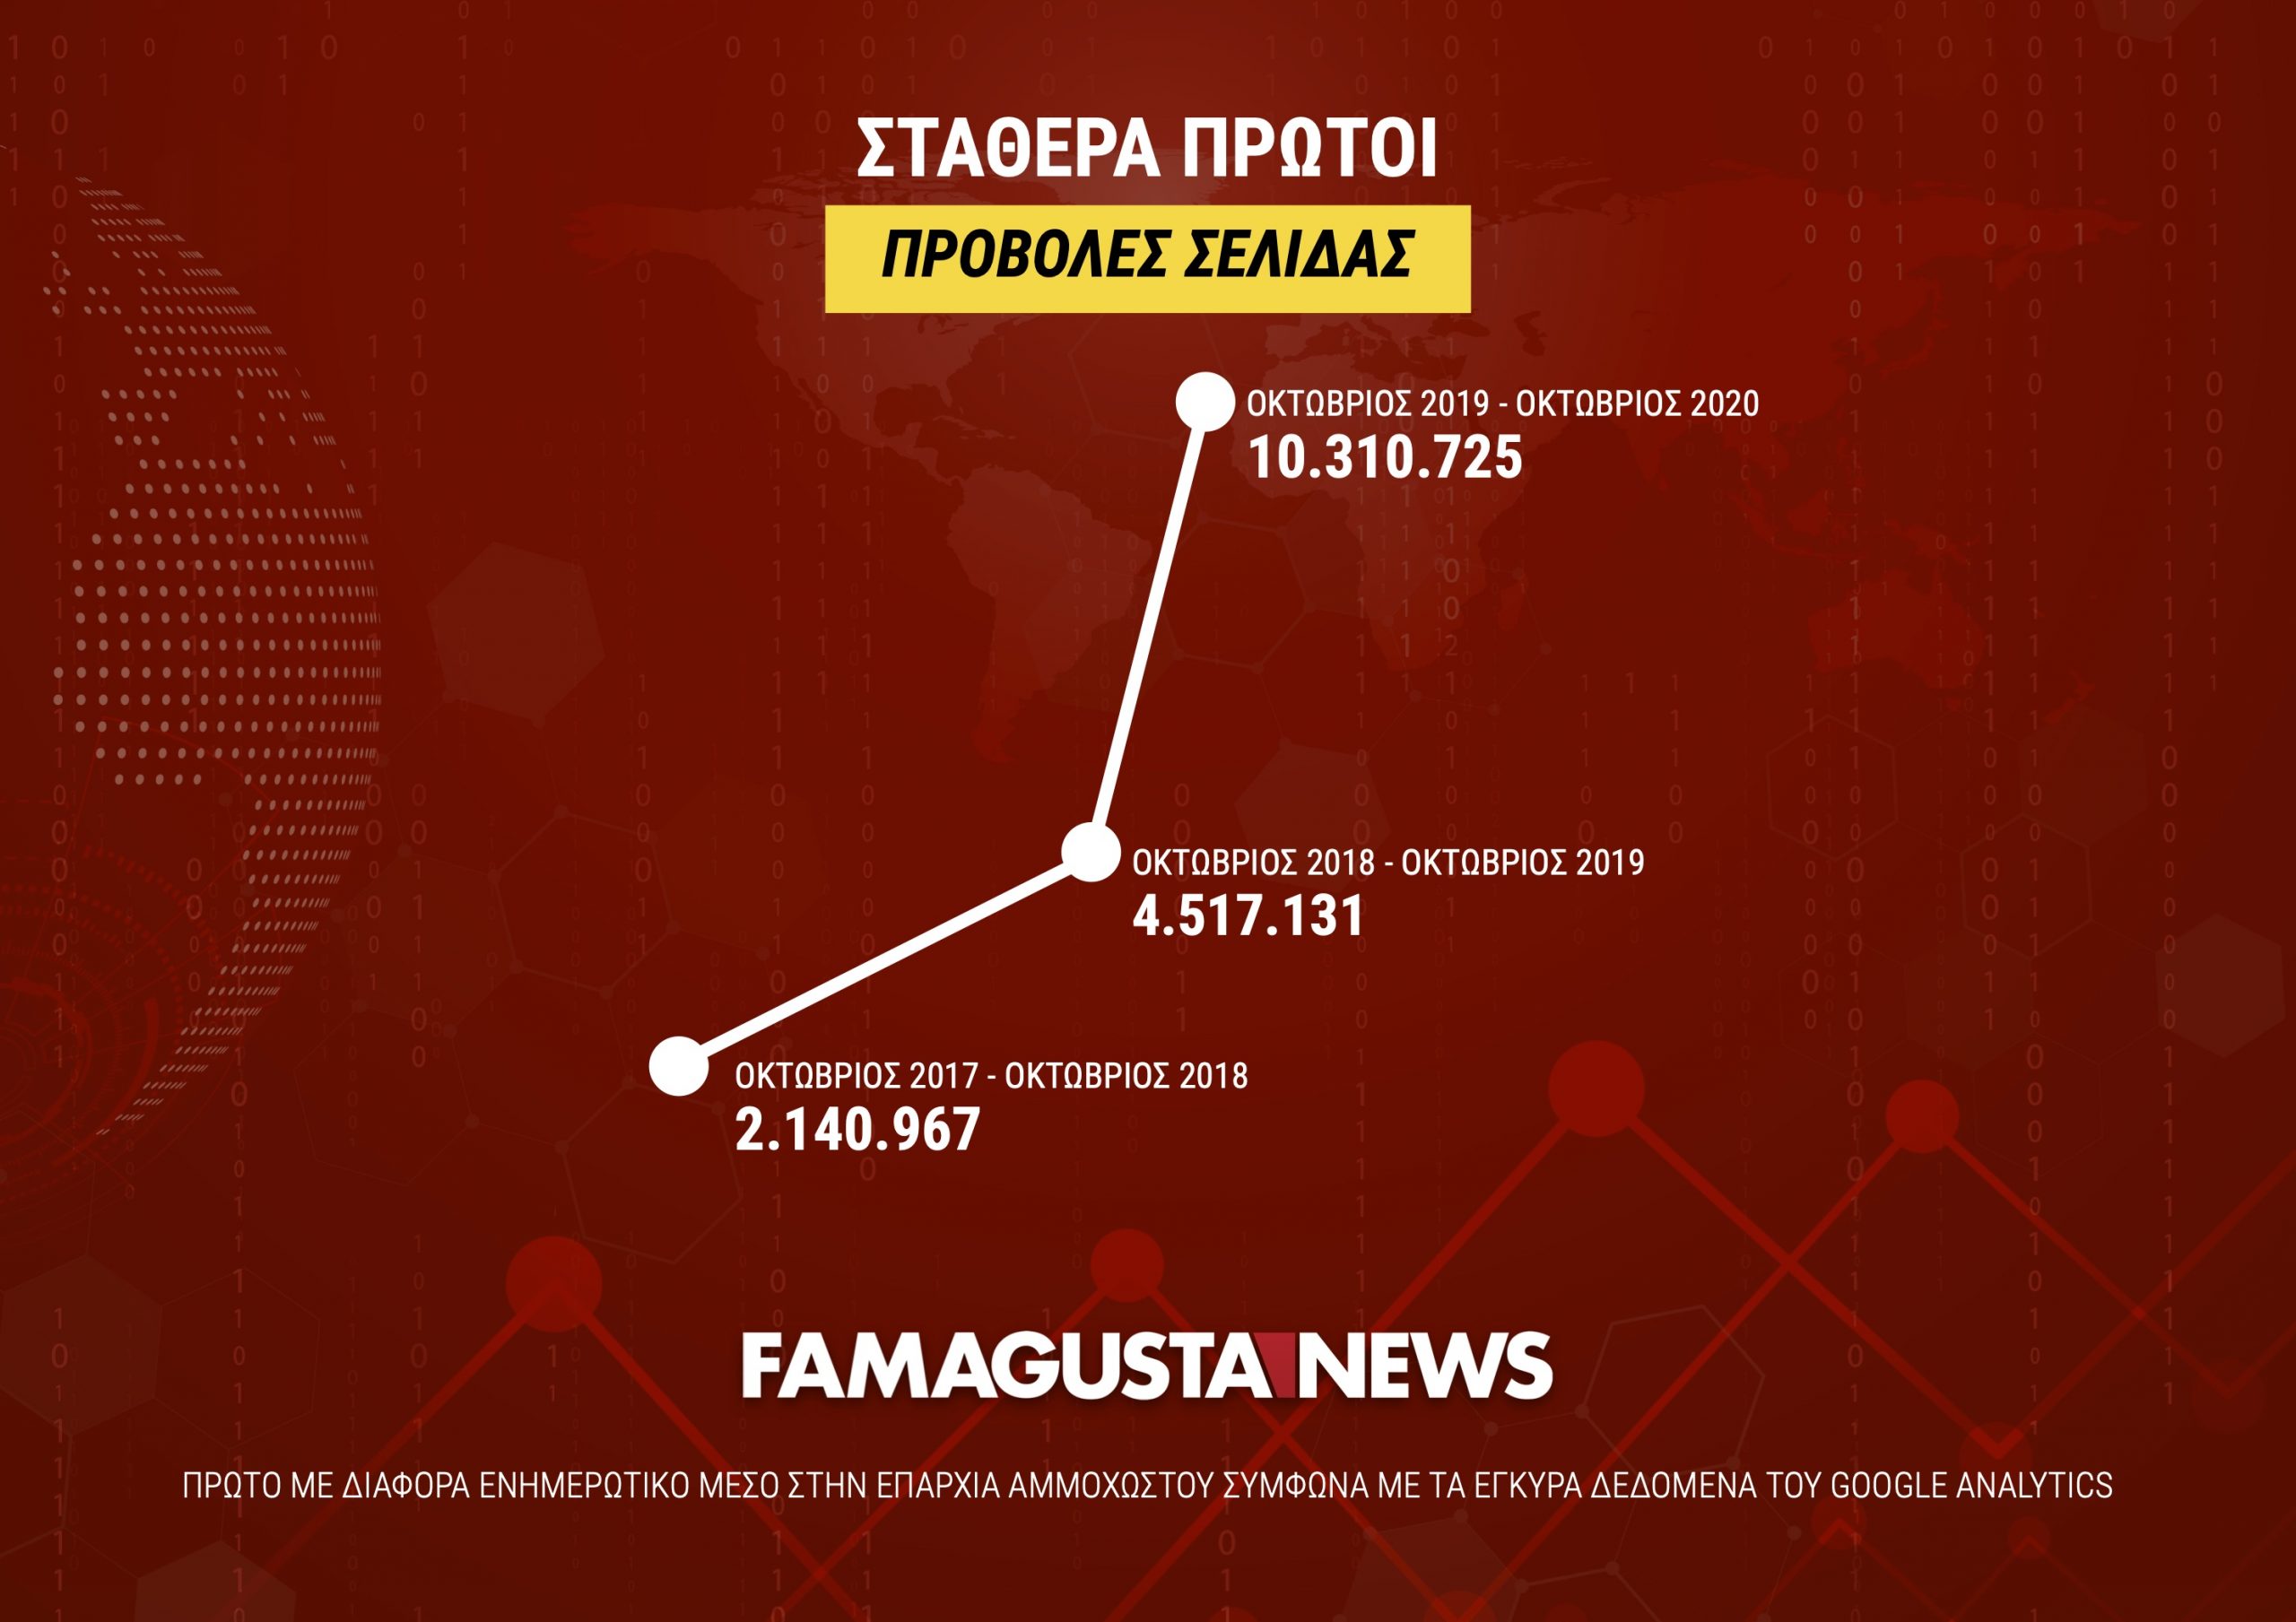 ПРОСМОТР СТРАНИЦЫ масштабируется DarkWhite Media, эксклюзив, Famagusta.News, FamagustaNews